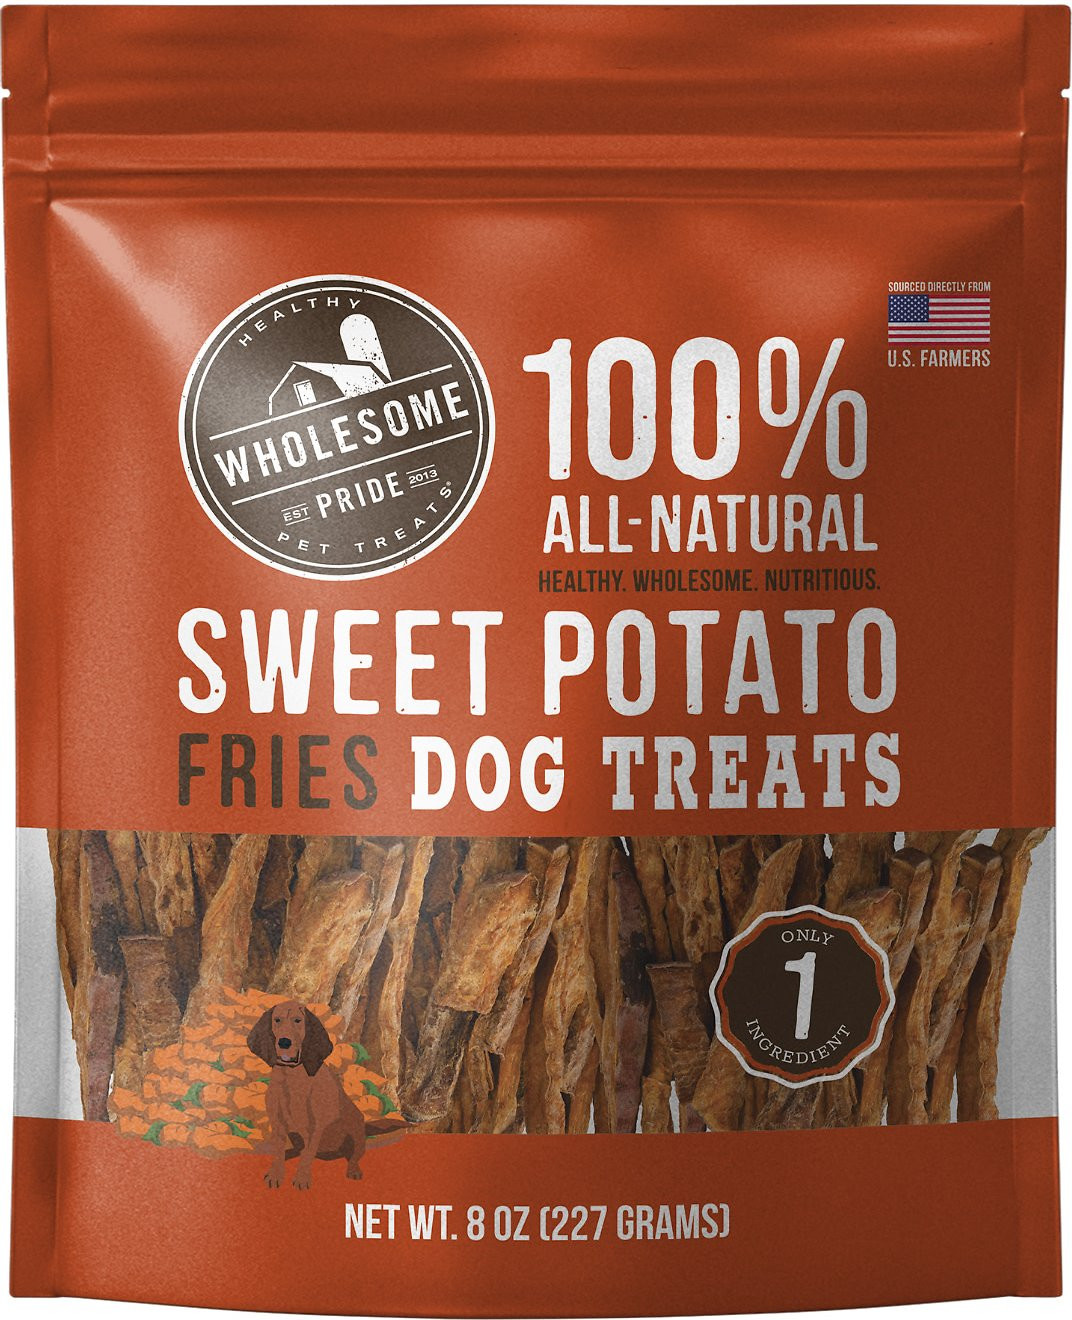 Sweet Potato Dog Treats
 Wholesome Pride Pet Treats Sweet Potato Fries Dog Treats